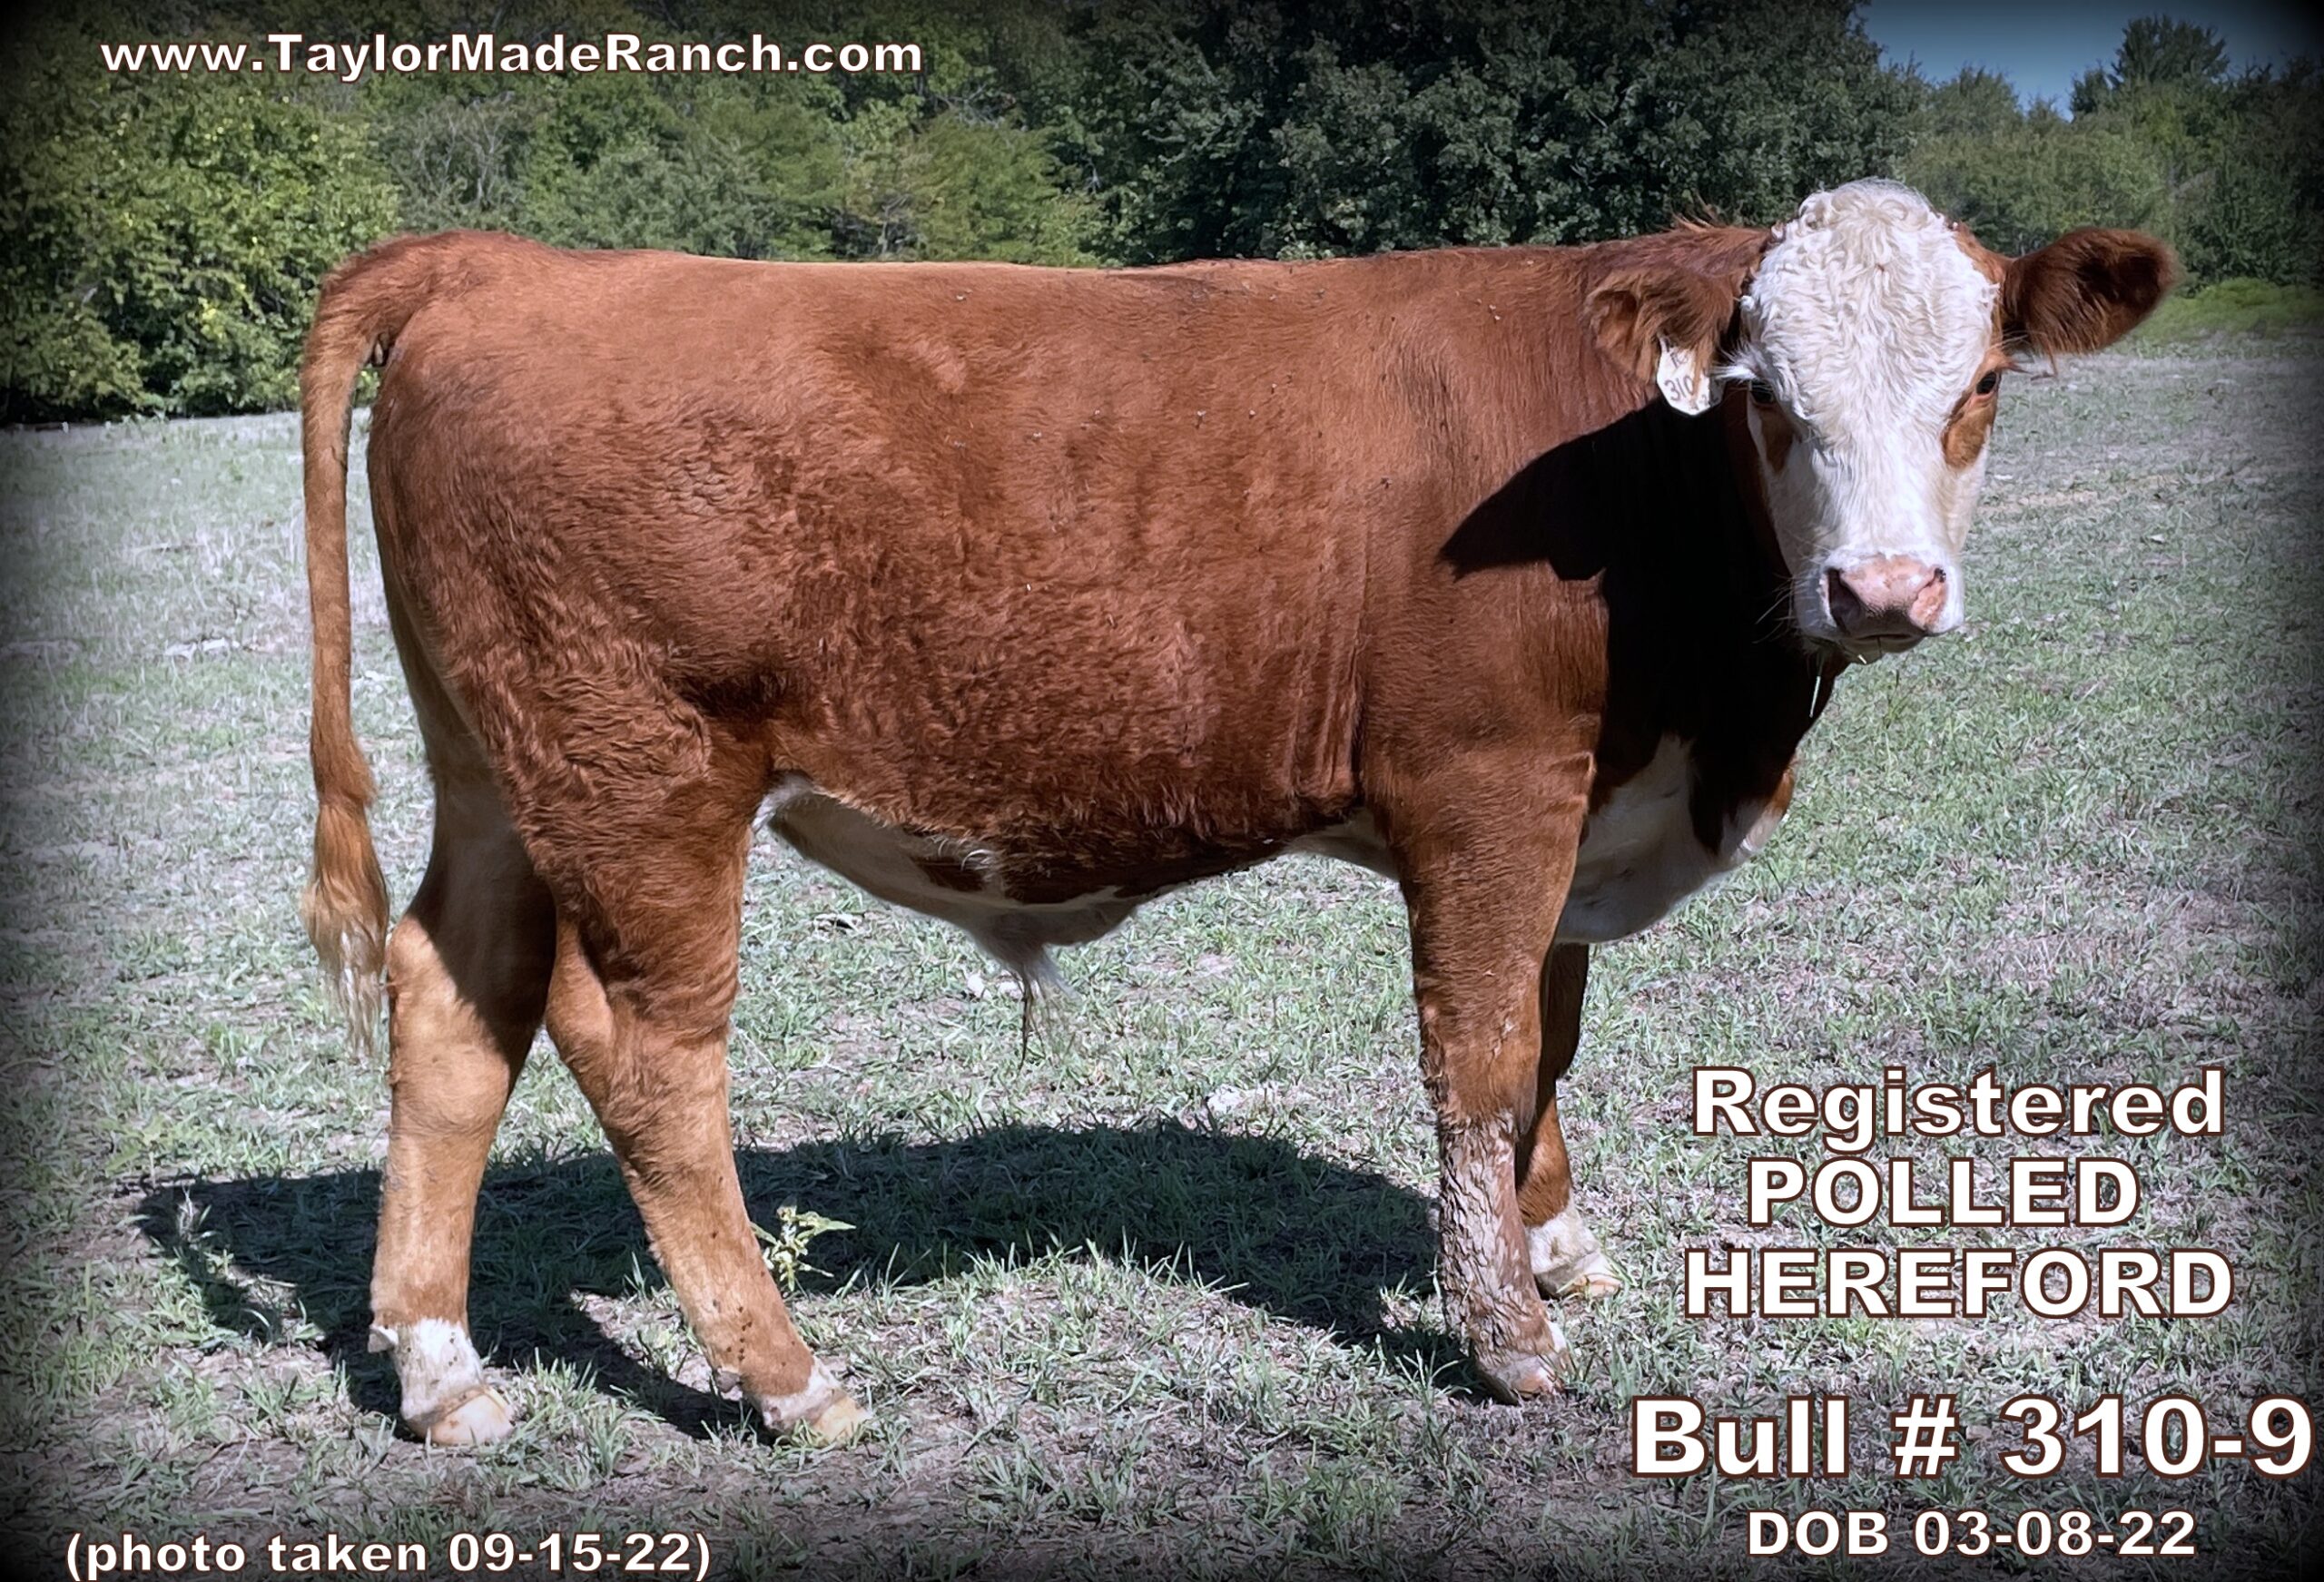 Registered Polled Hereford bull in NE Texas - 310-9-Bull-DOB-03-08-22 - #TaylorMadeRanch - photo-taken-09-15-22